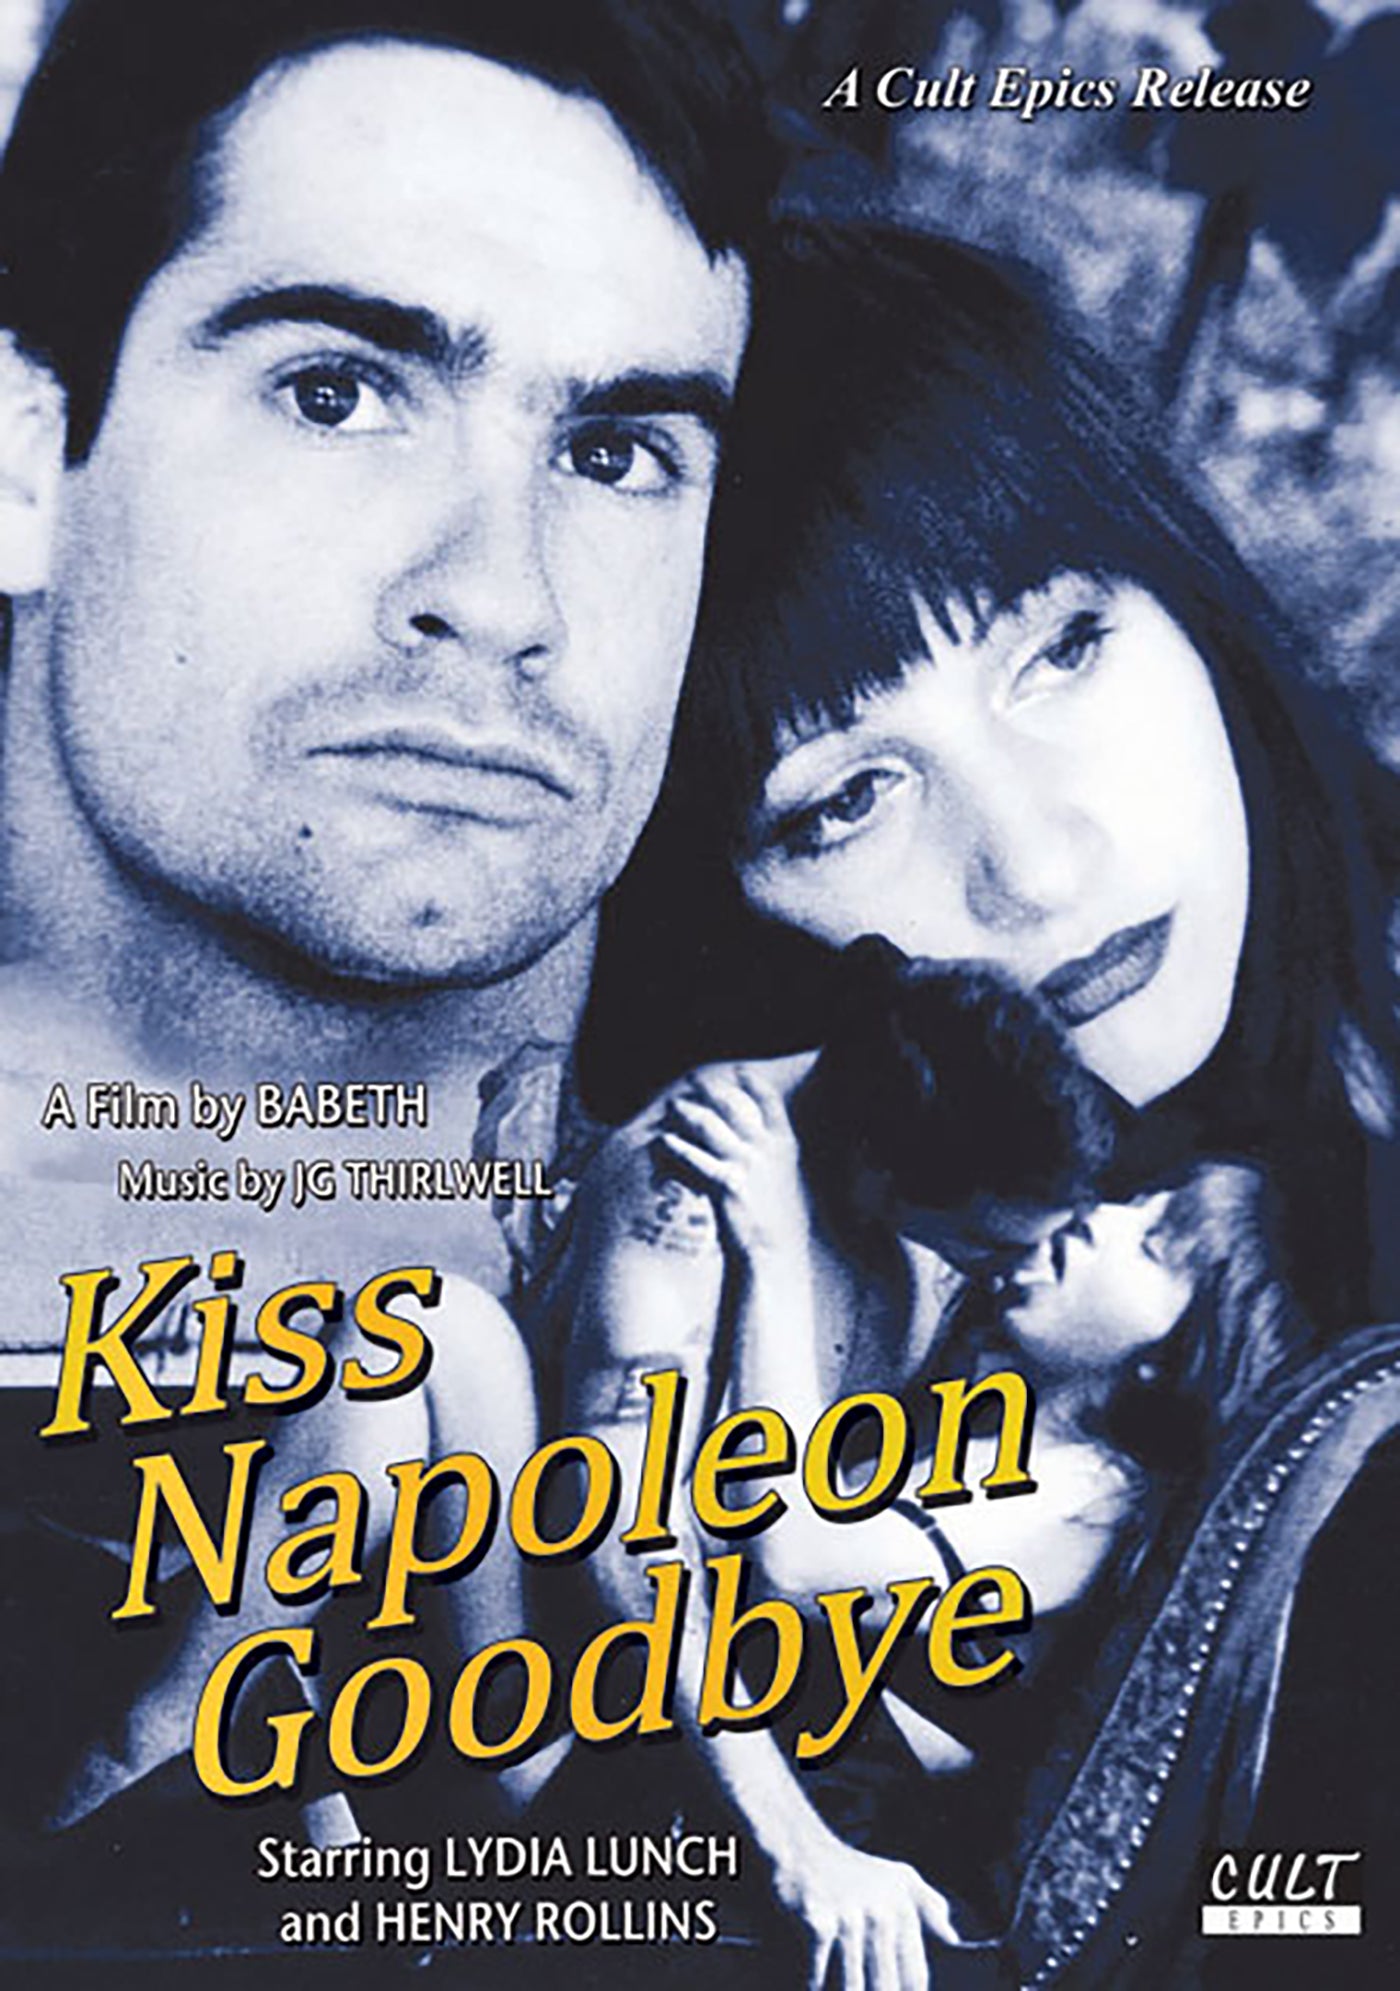 KISS NAPOLEON GOODBYE DVD